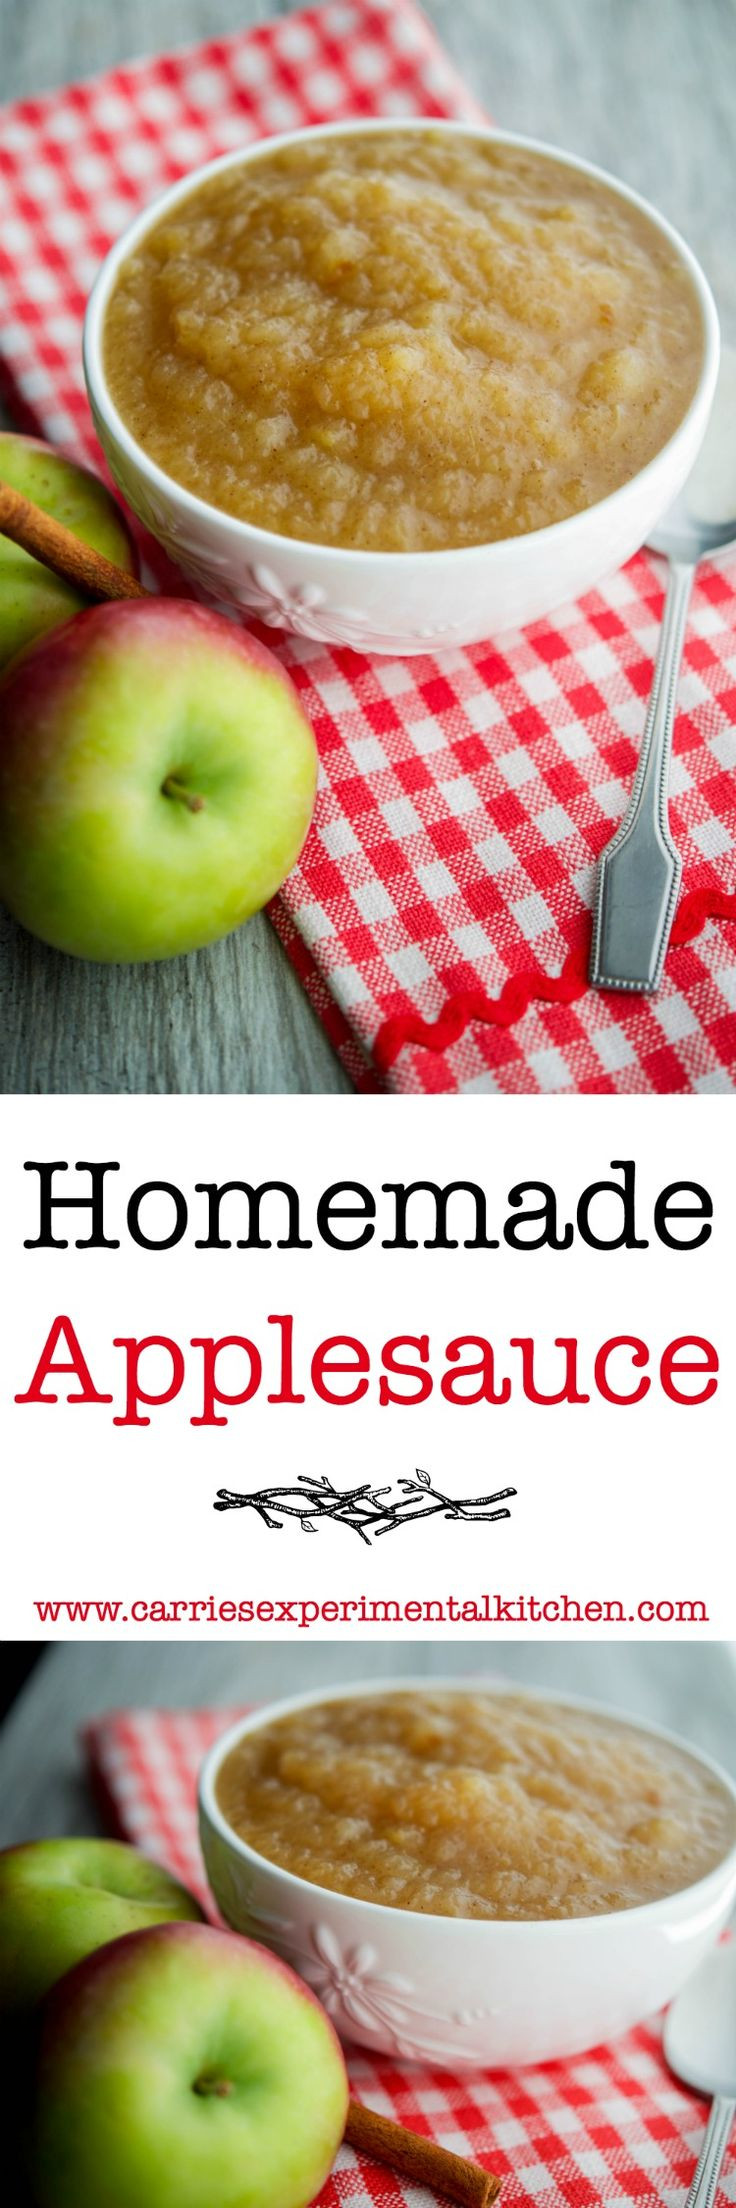 Recipes Using Applesauce
 Homemade Applesauce Recipe